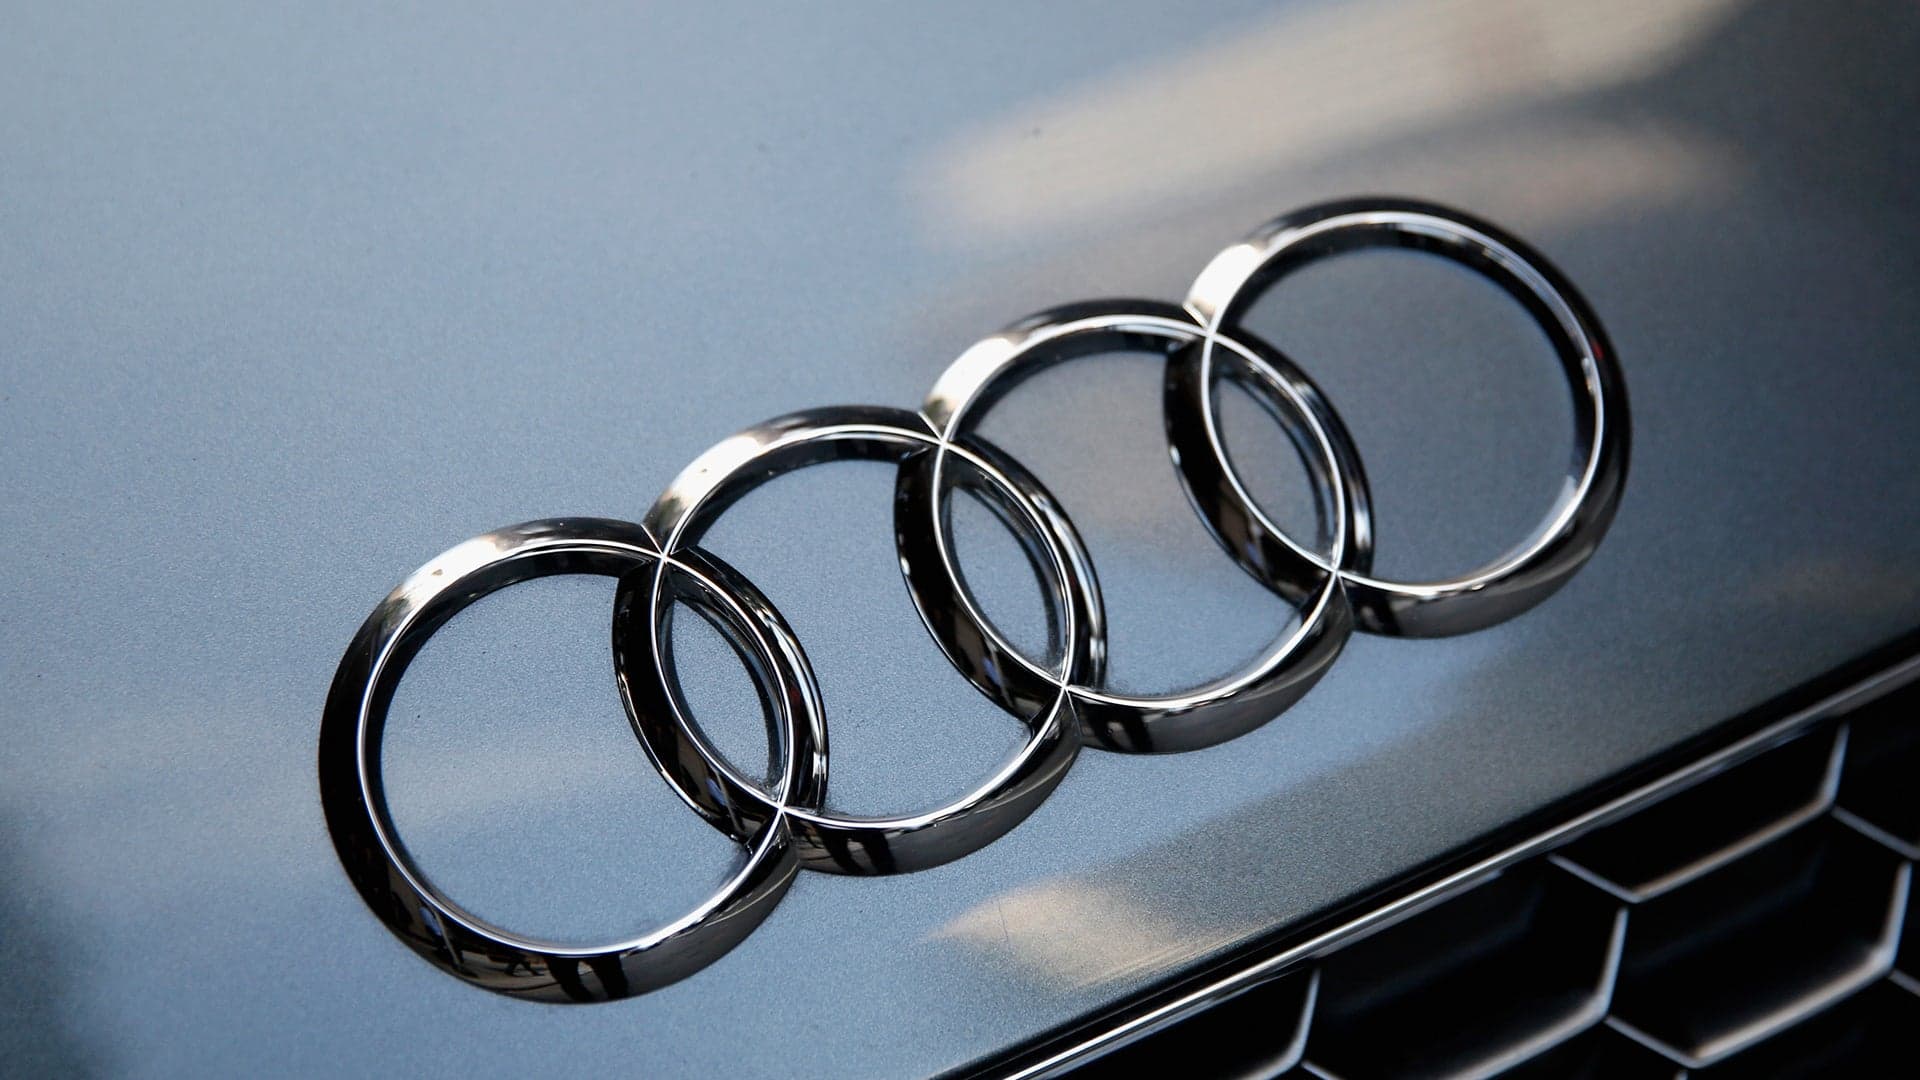 German Prosecutors Fine Audi $926 Million Over Diesel Emissions Cheating